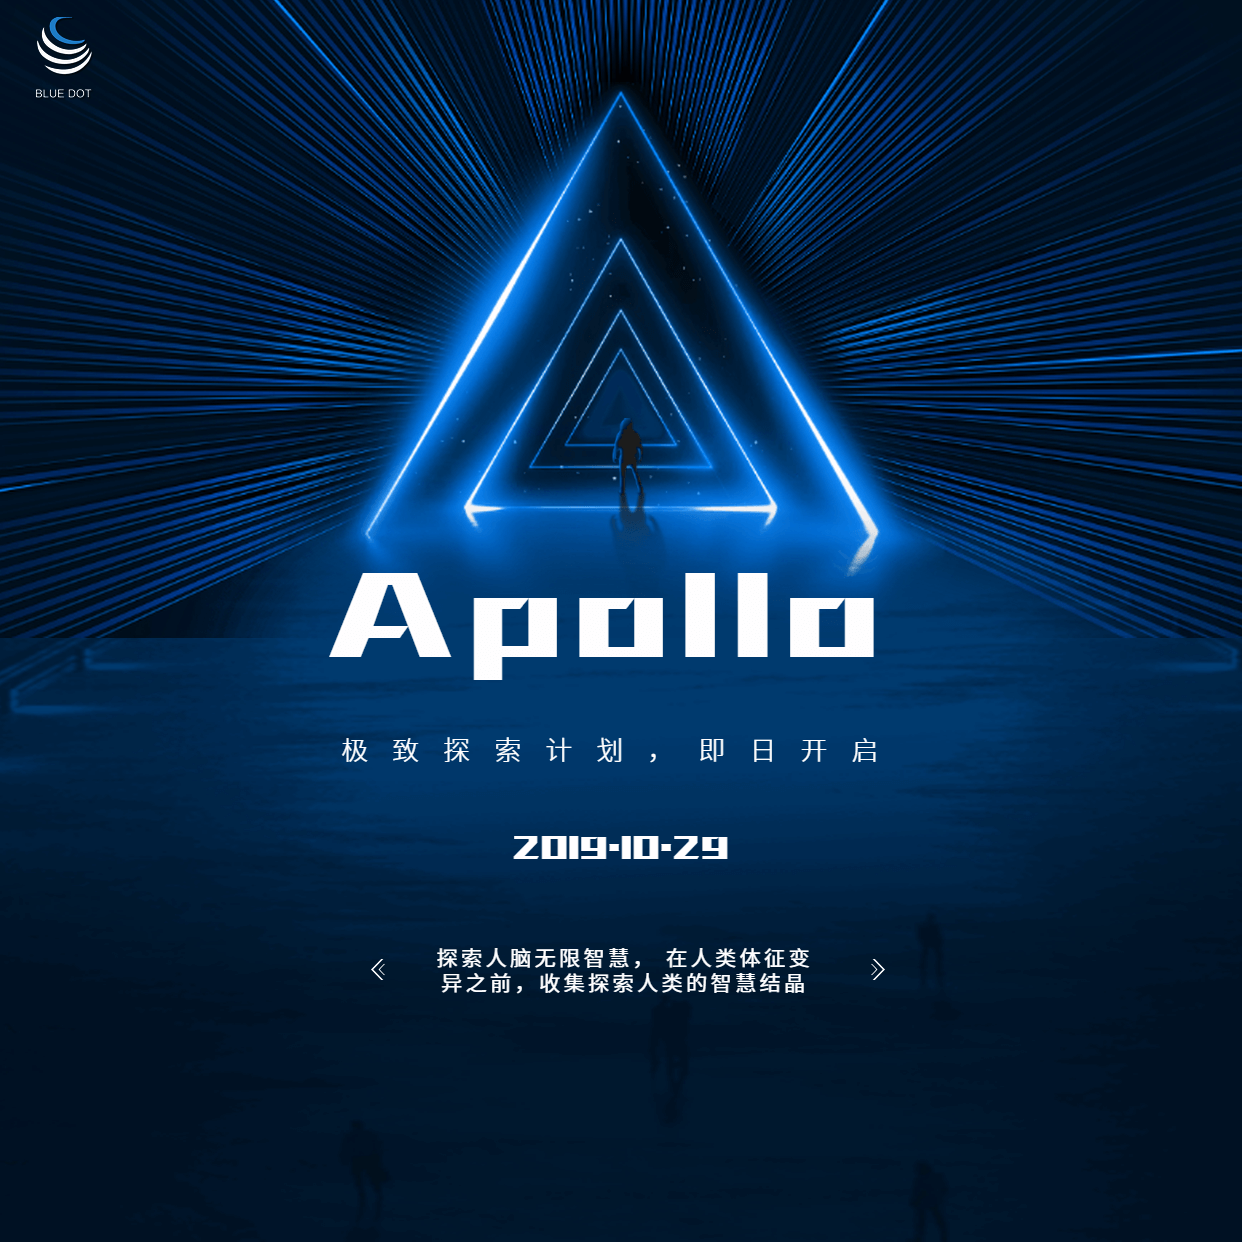 Apollo，极致探索计划，即日开启-BlueDotCC, 蓝点文化创意